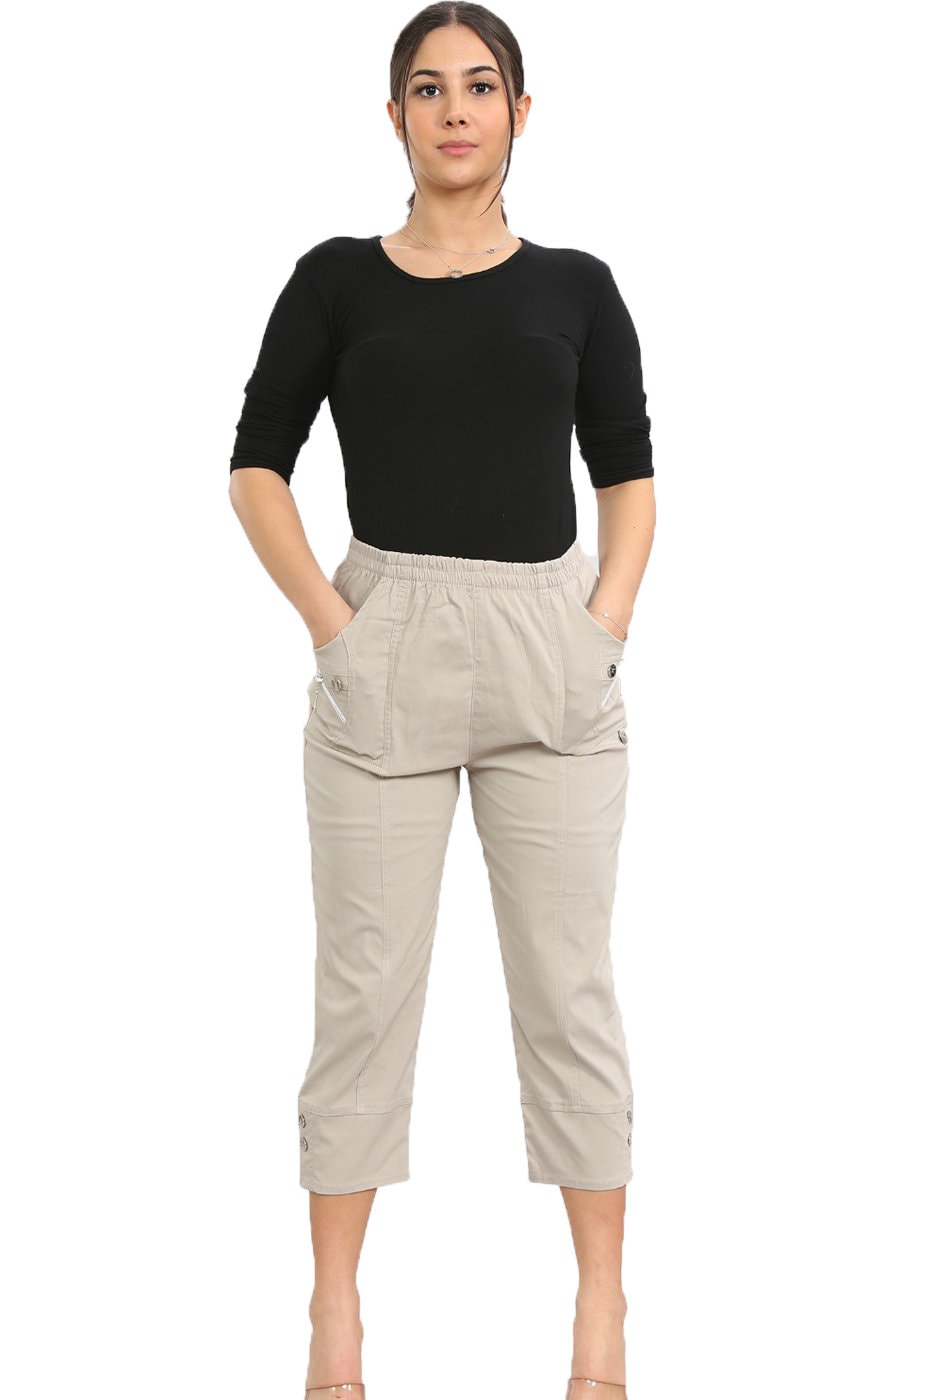 KAV Linen Trousers for Woman Elasticated Casual Pants Flat Front Elastic  Back Three Quarters Ladies Trouser for Ladies Khaki 16  DIY at BQ